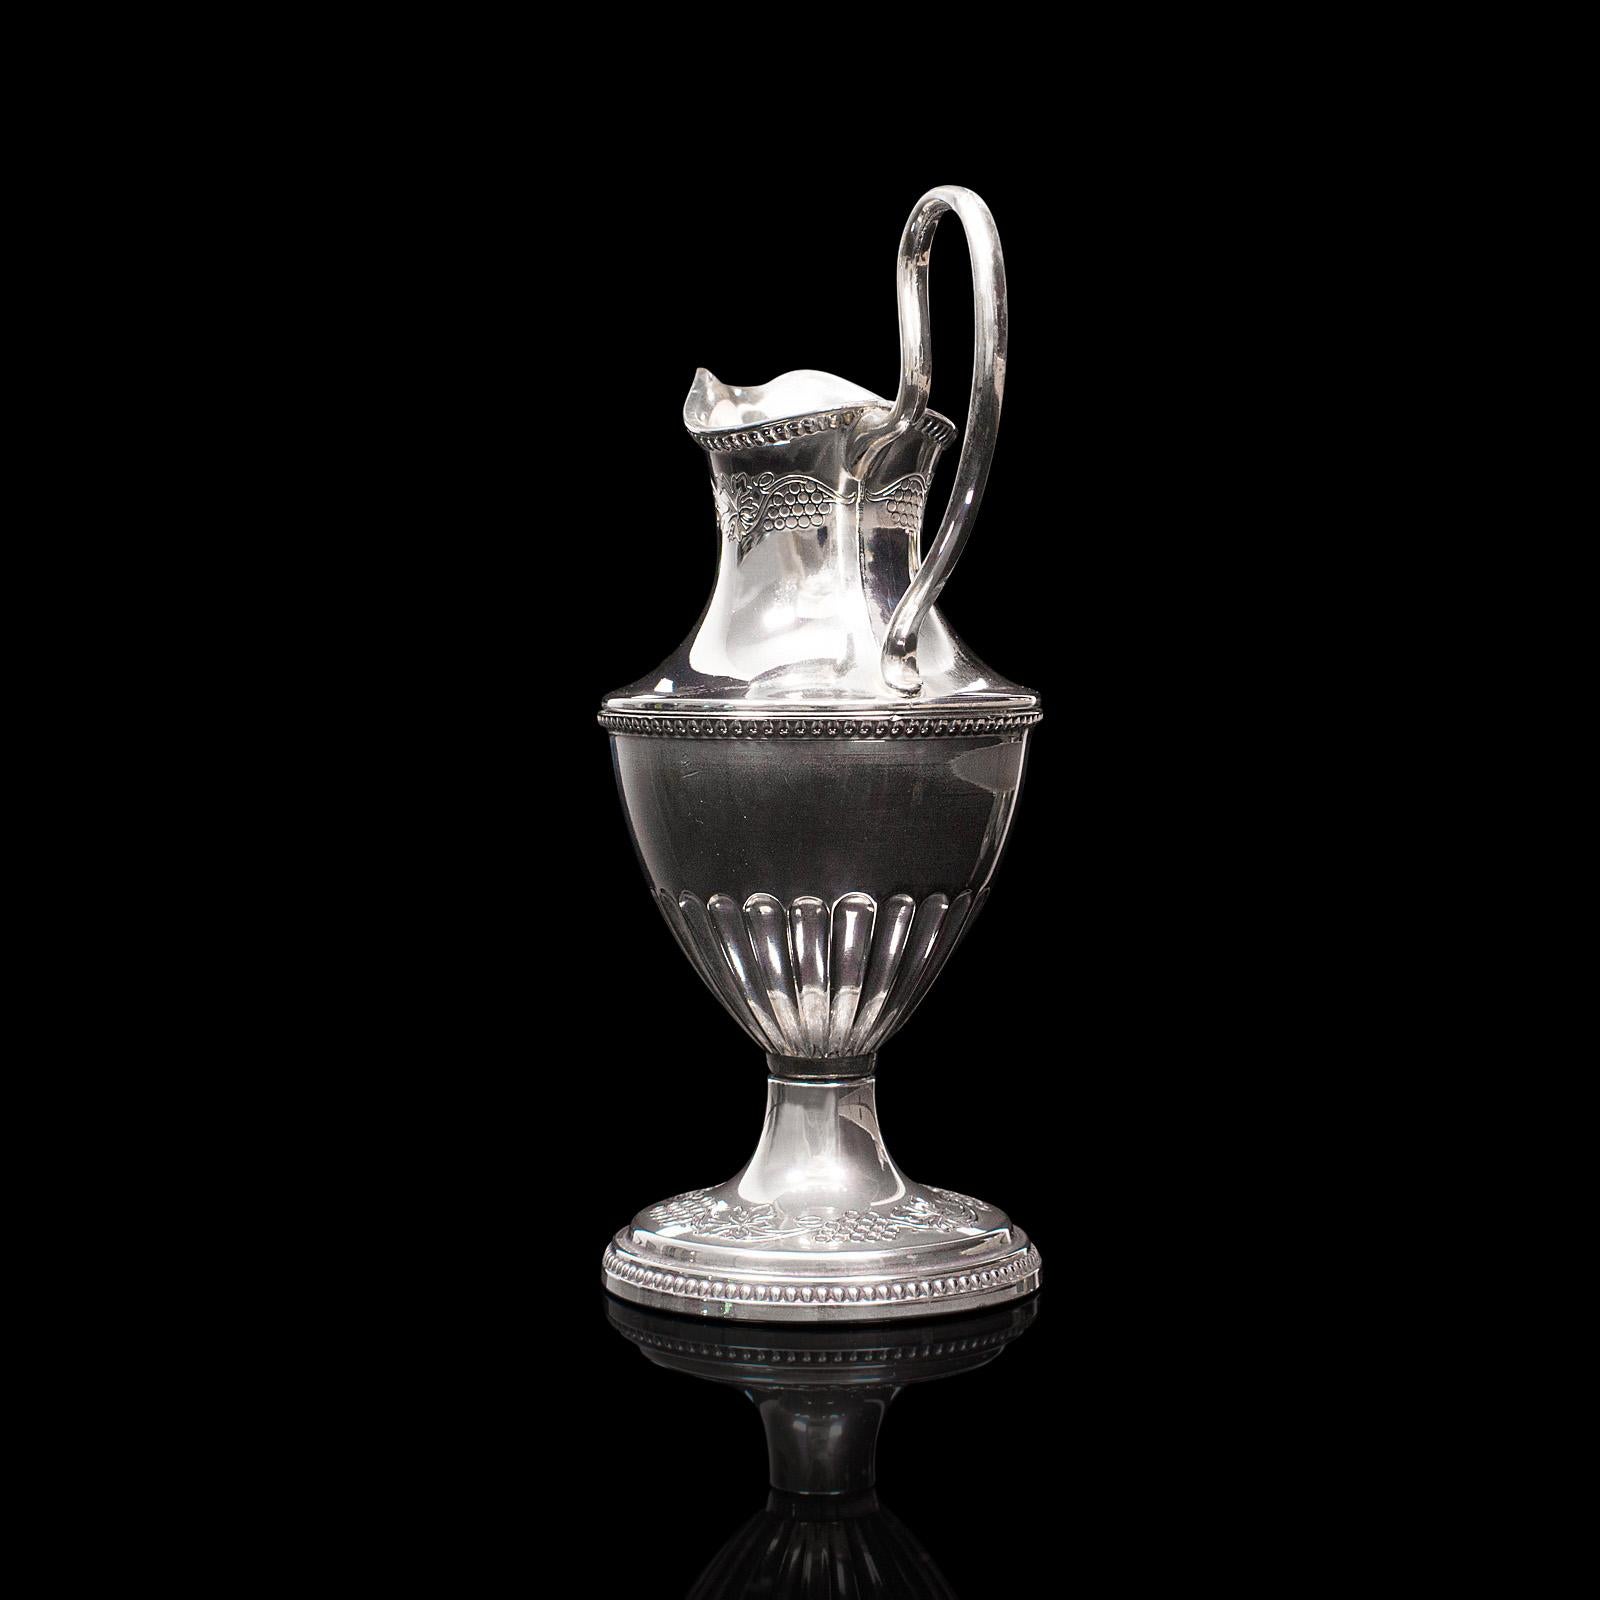 British Antique Pouring Jug, English, Silver Plate, Decorative, Posy Vase, Edwardian For Sale